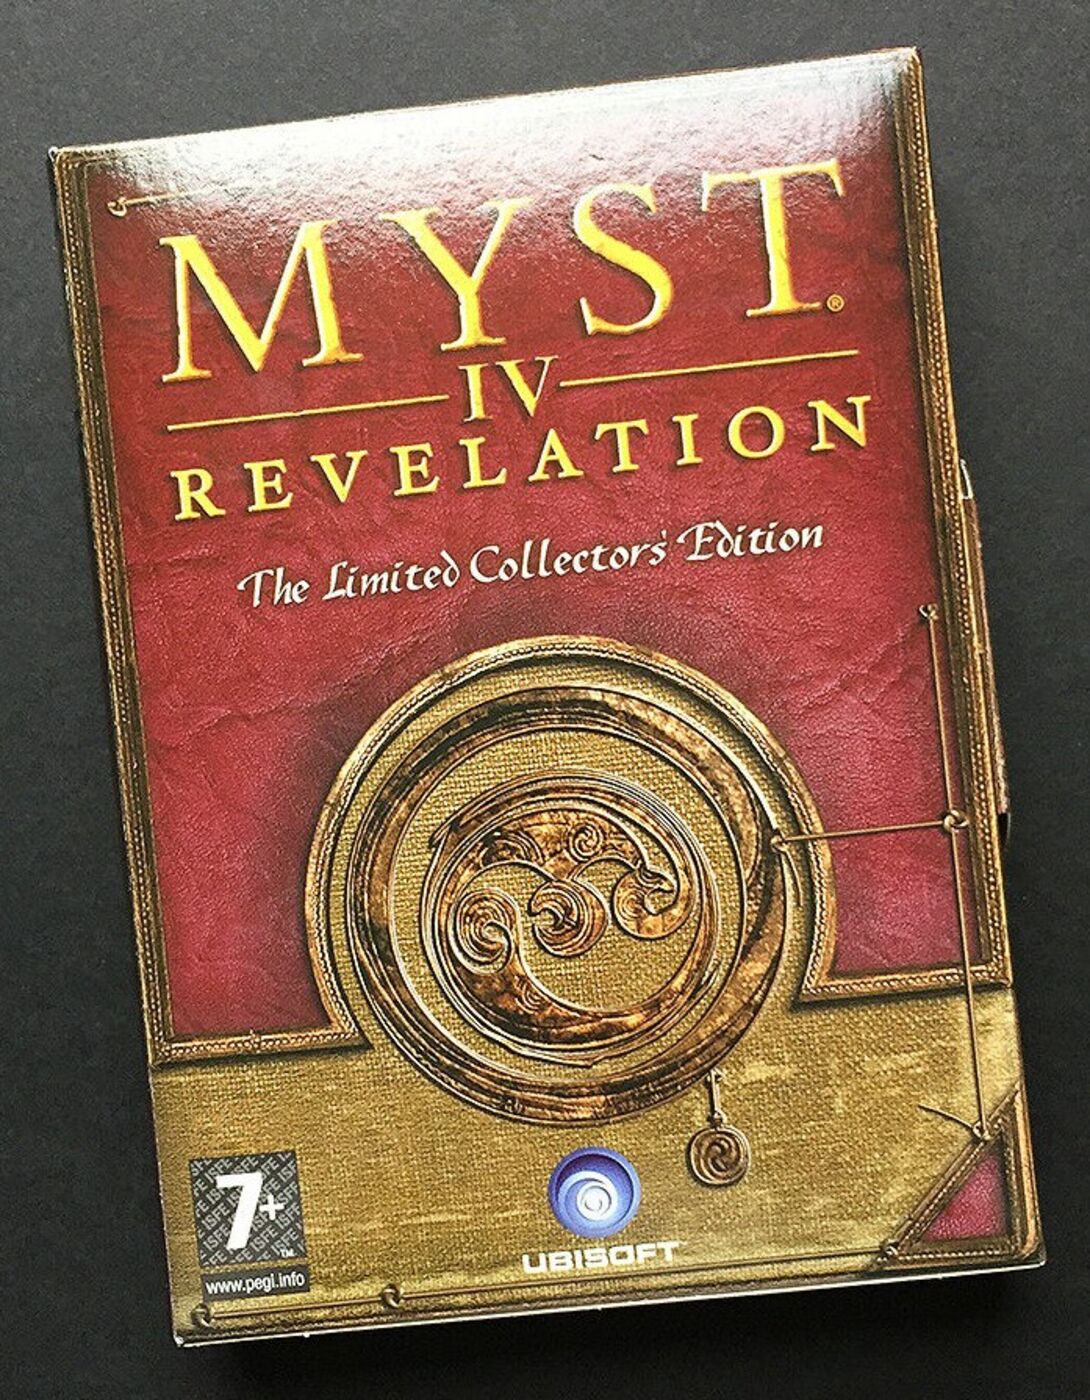 myst iv revelation windows 10